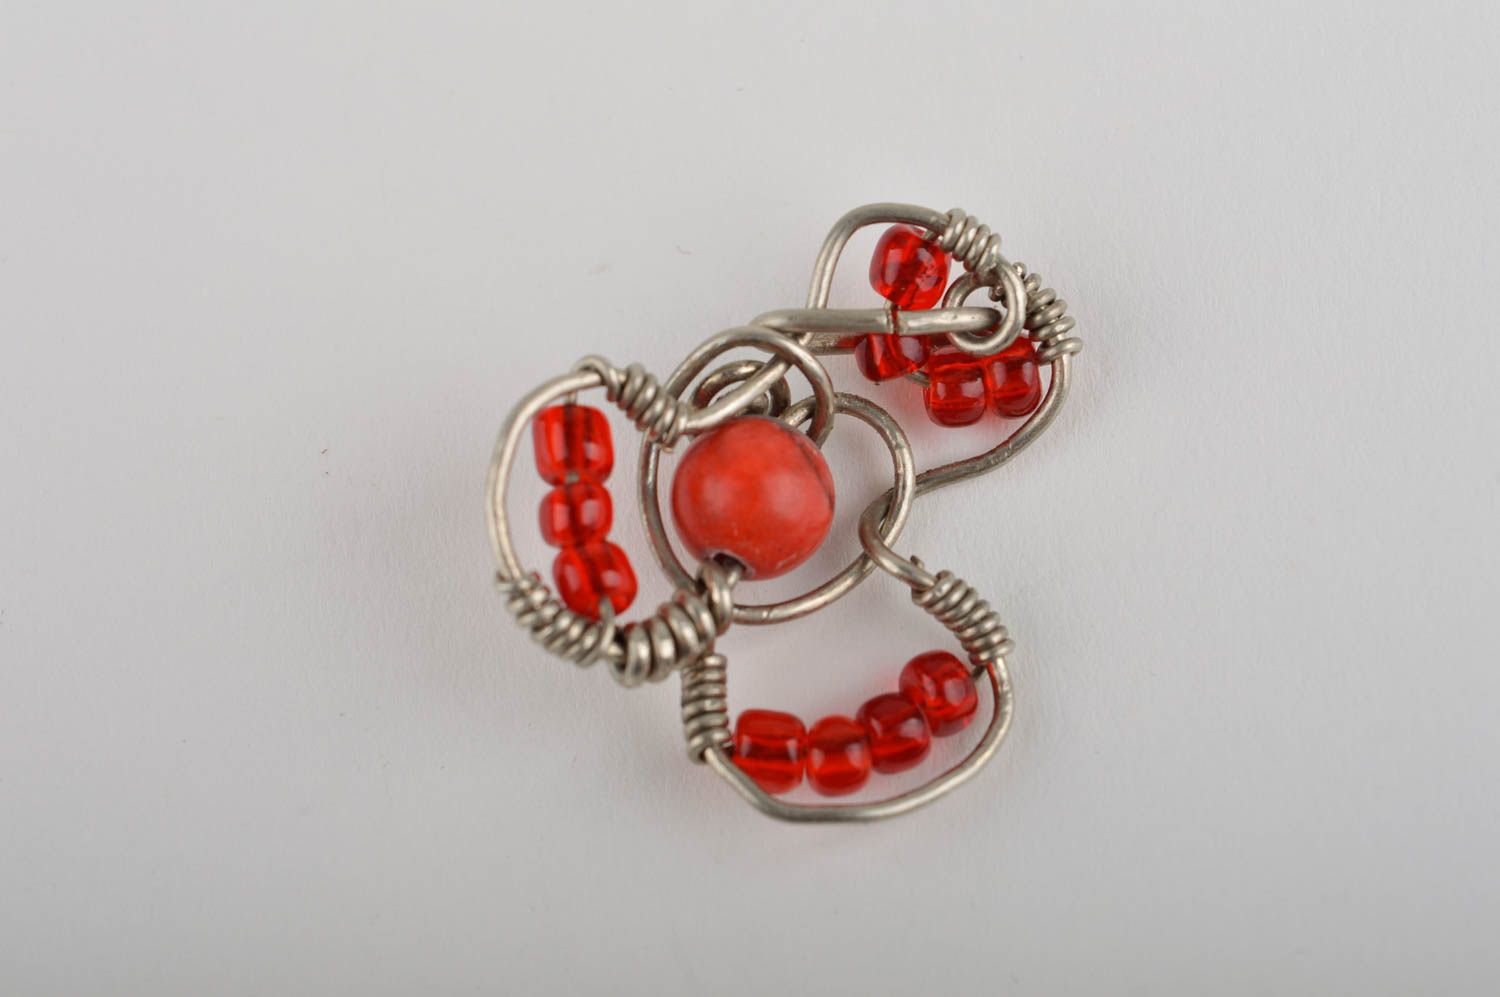 Gemstone necklace metal pendant necklace fashion jewelry designer accessories photo 3